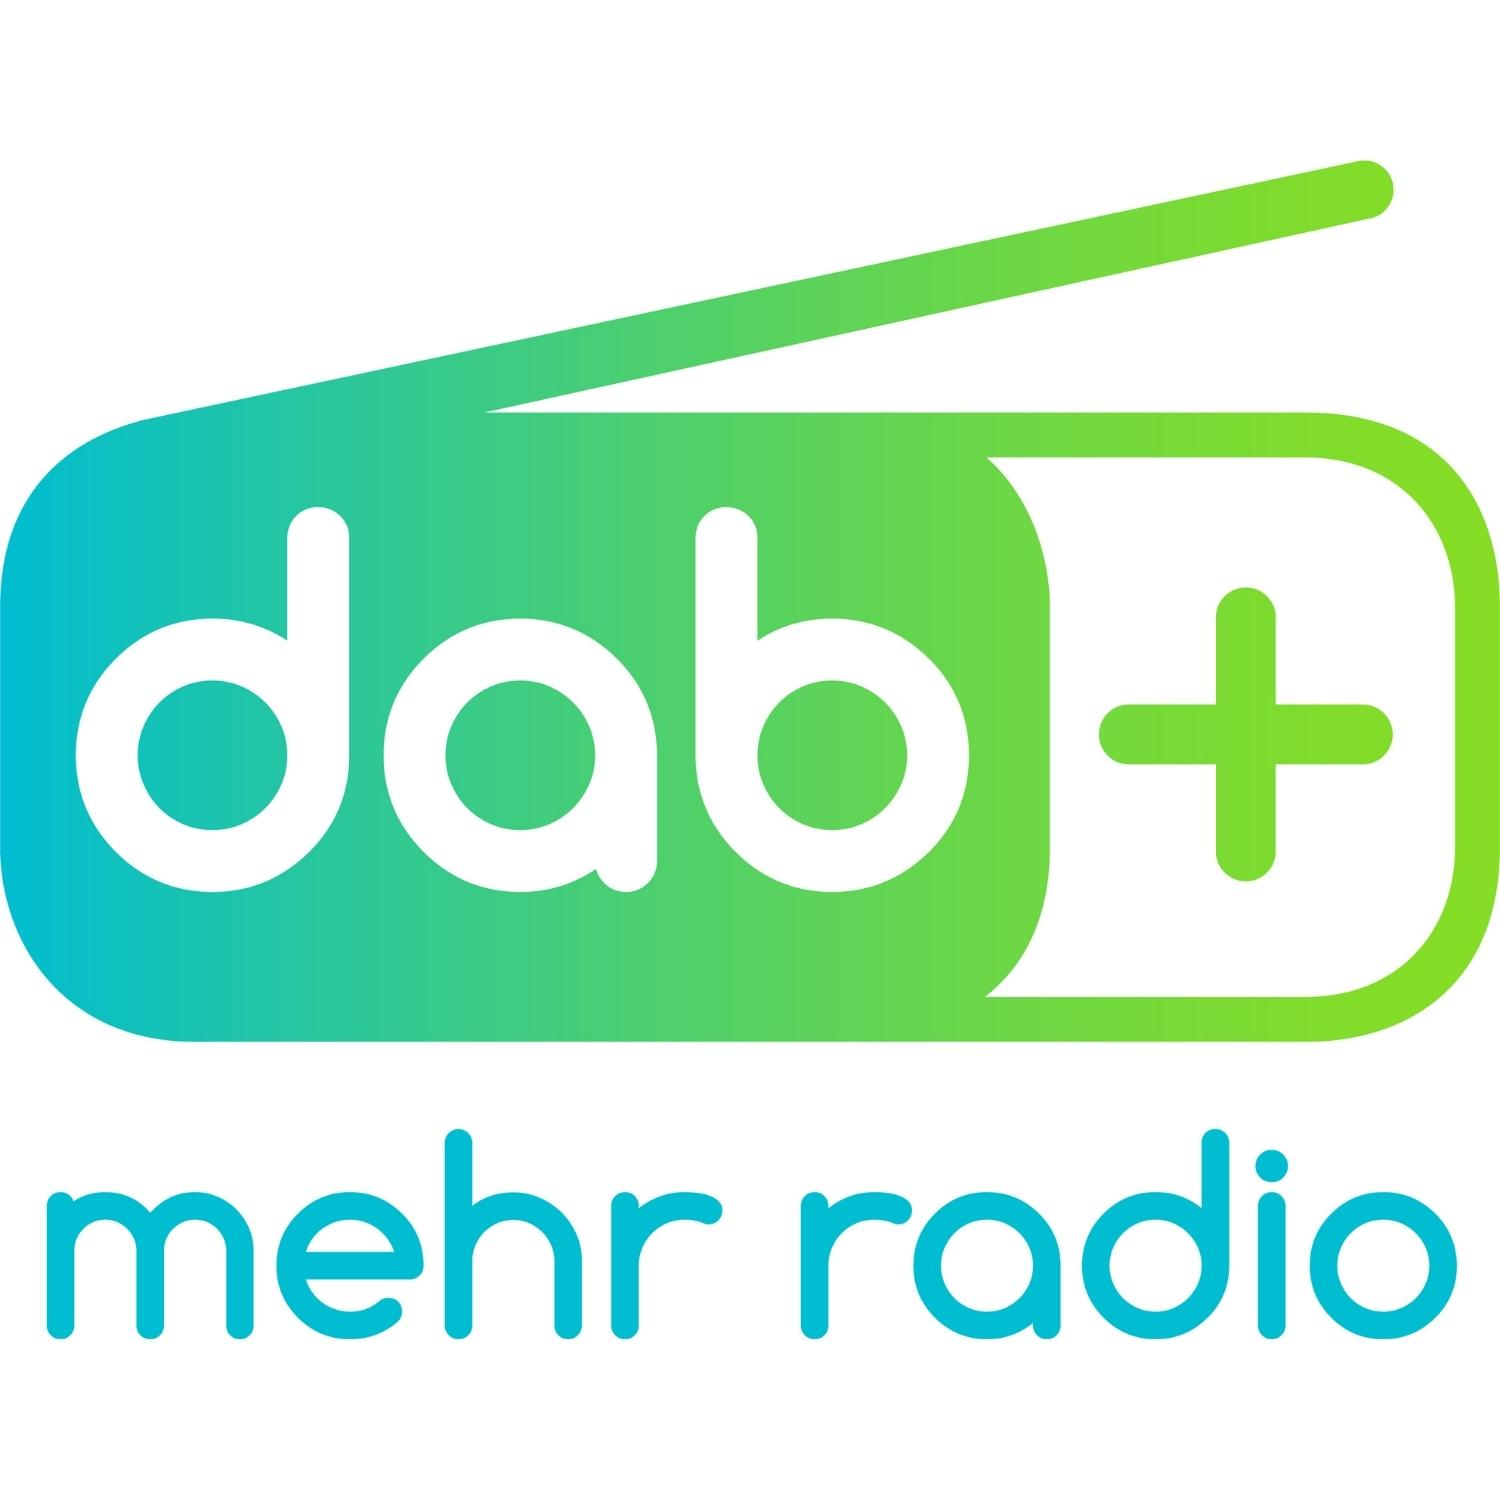 AM, FM, Schwarz SOUNDMASTER DAB280SW DAB-Radio, DAB+,